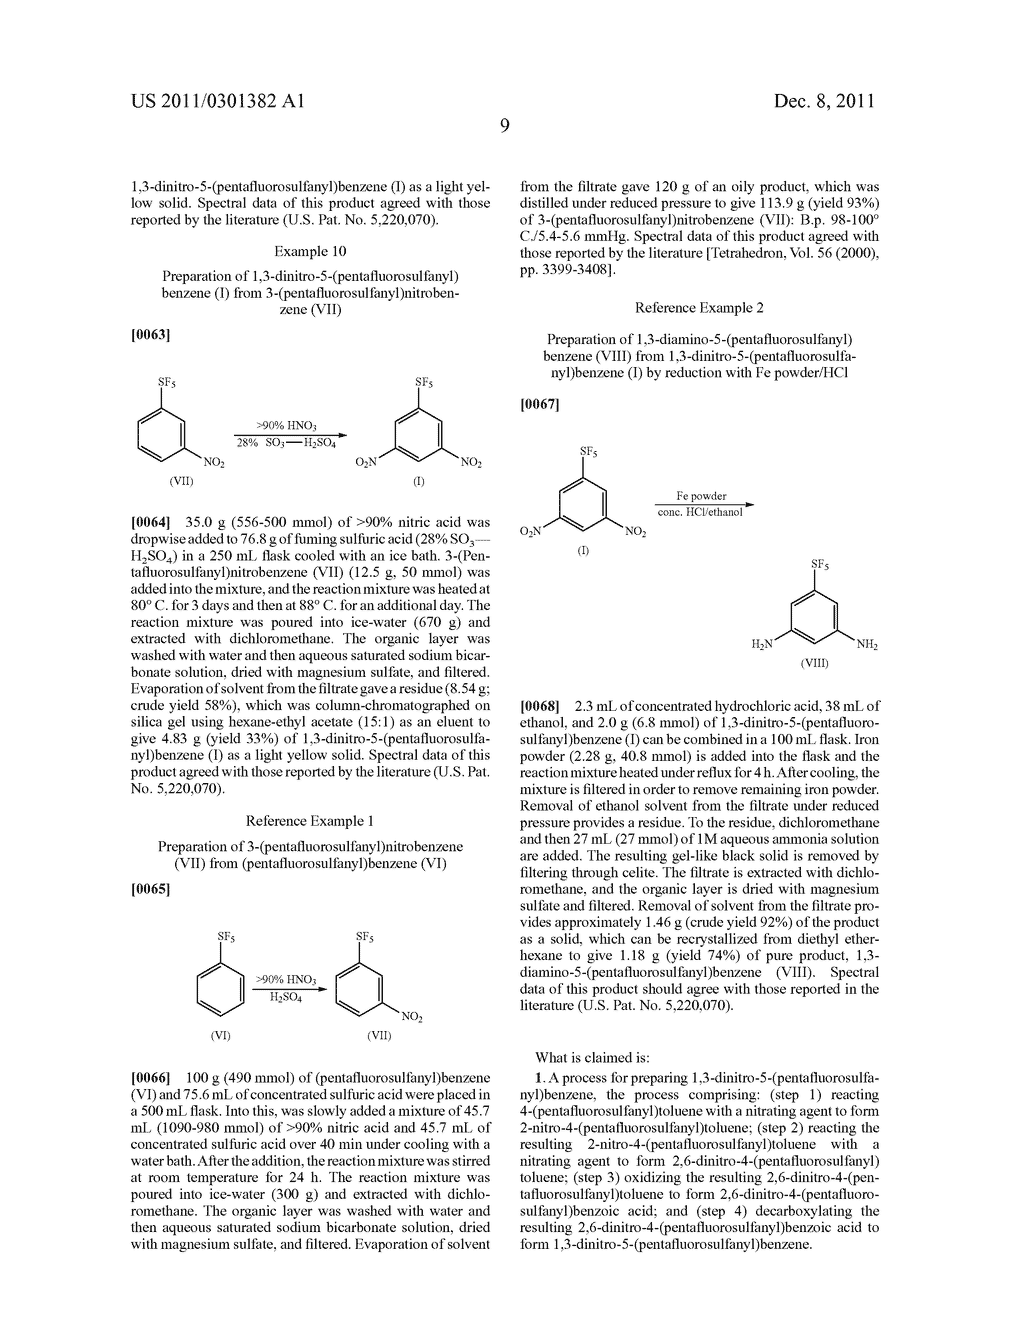 Processes for Preparing 1,3-Dinitro-5-(Pentafluorosulfanyl)Benzene and its     Intermediates - diagram, schematic, and image 10